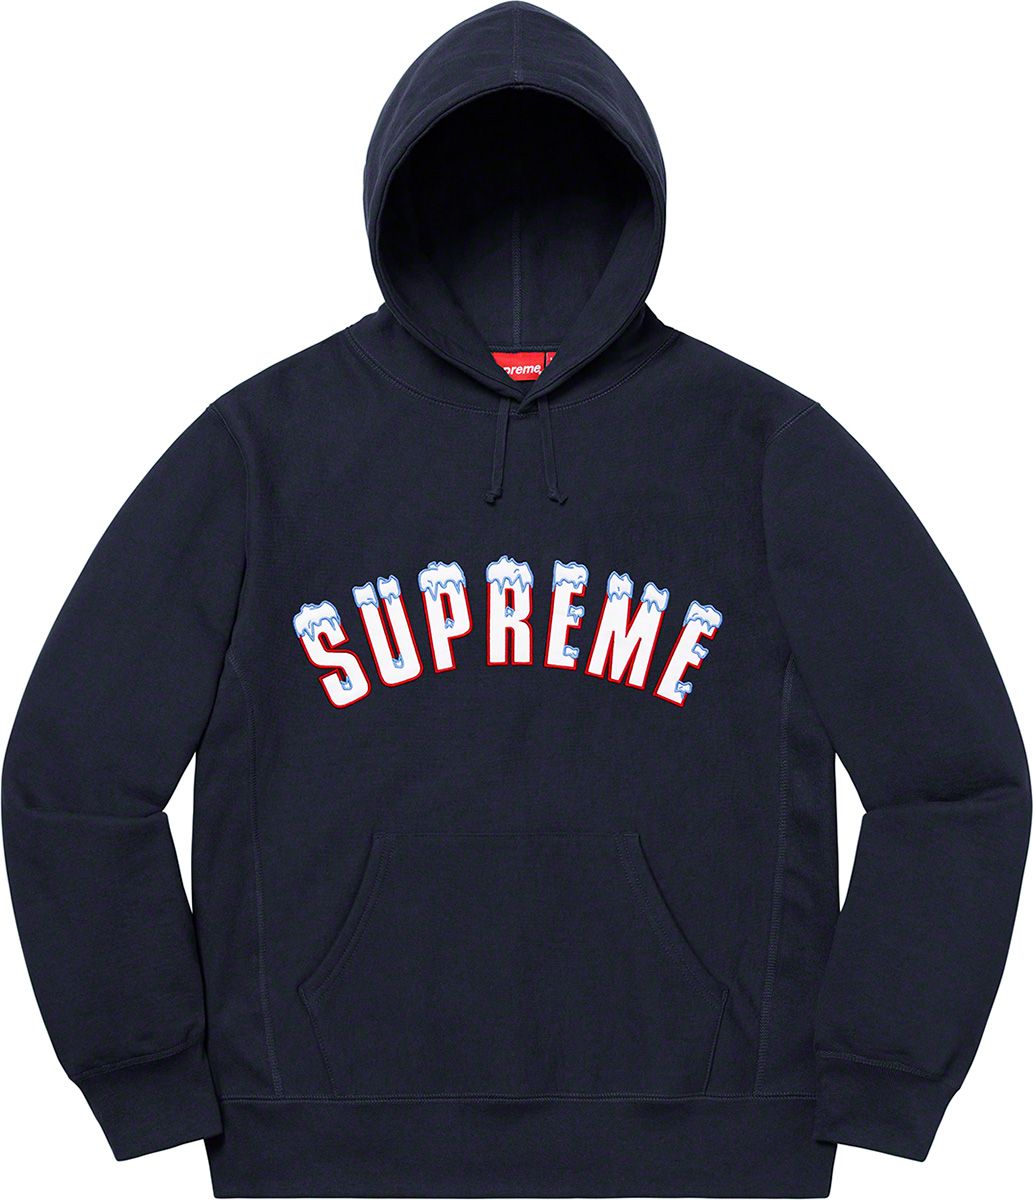 ▪️素材▪️【人気モデル】Supreme Icy Arc Hooded Sweatshirt